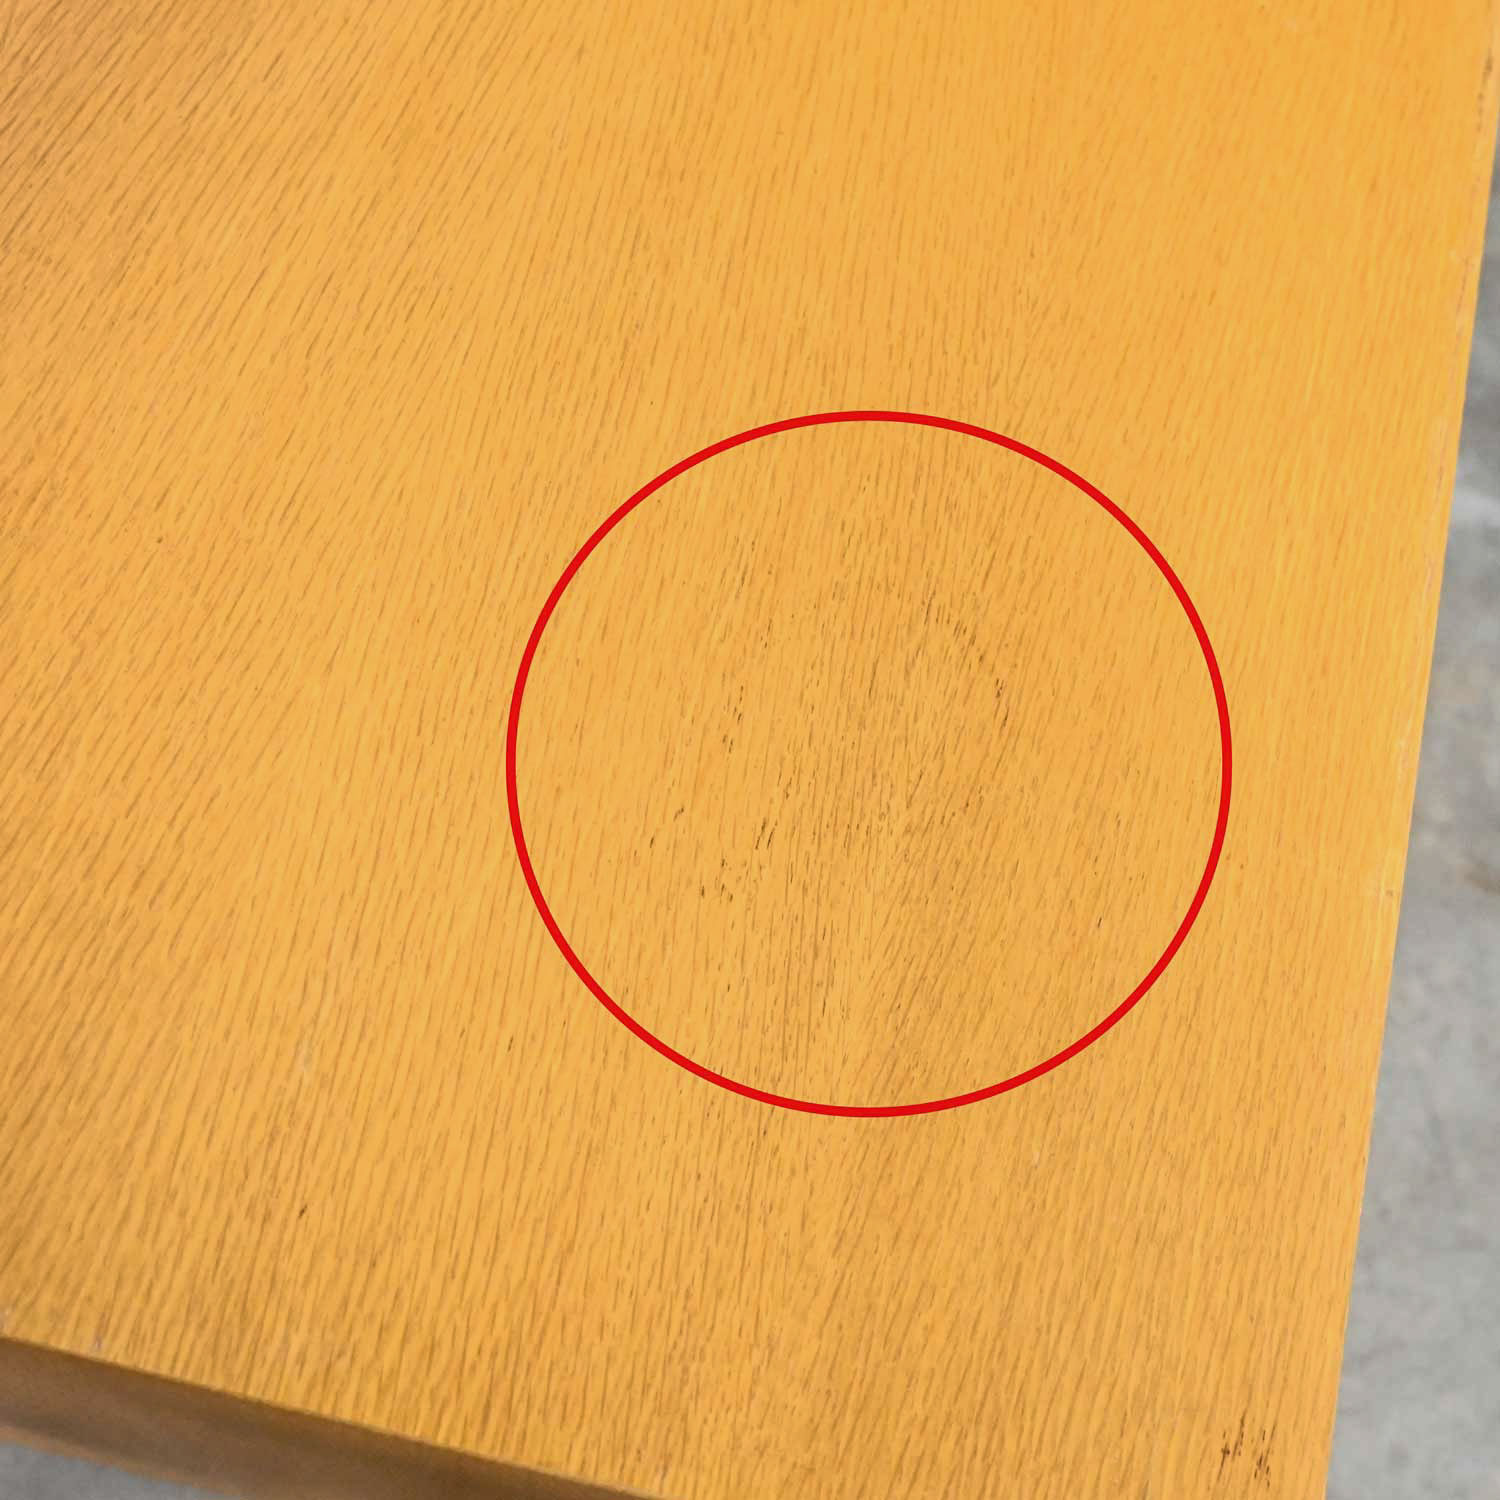 Intrex Furniture Wood Veneer Cube End or Side Table Pedestal Attributed to Paul Mayen